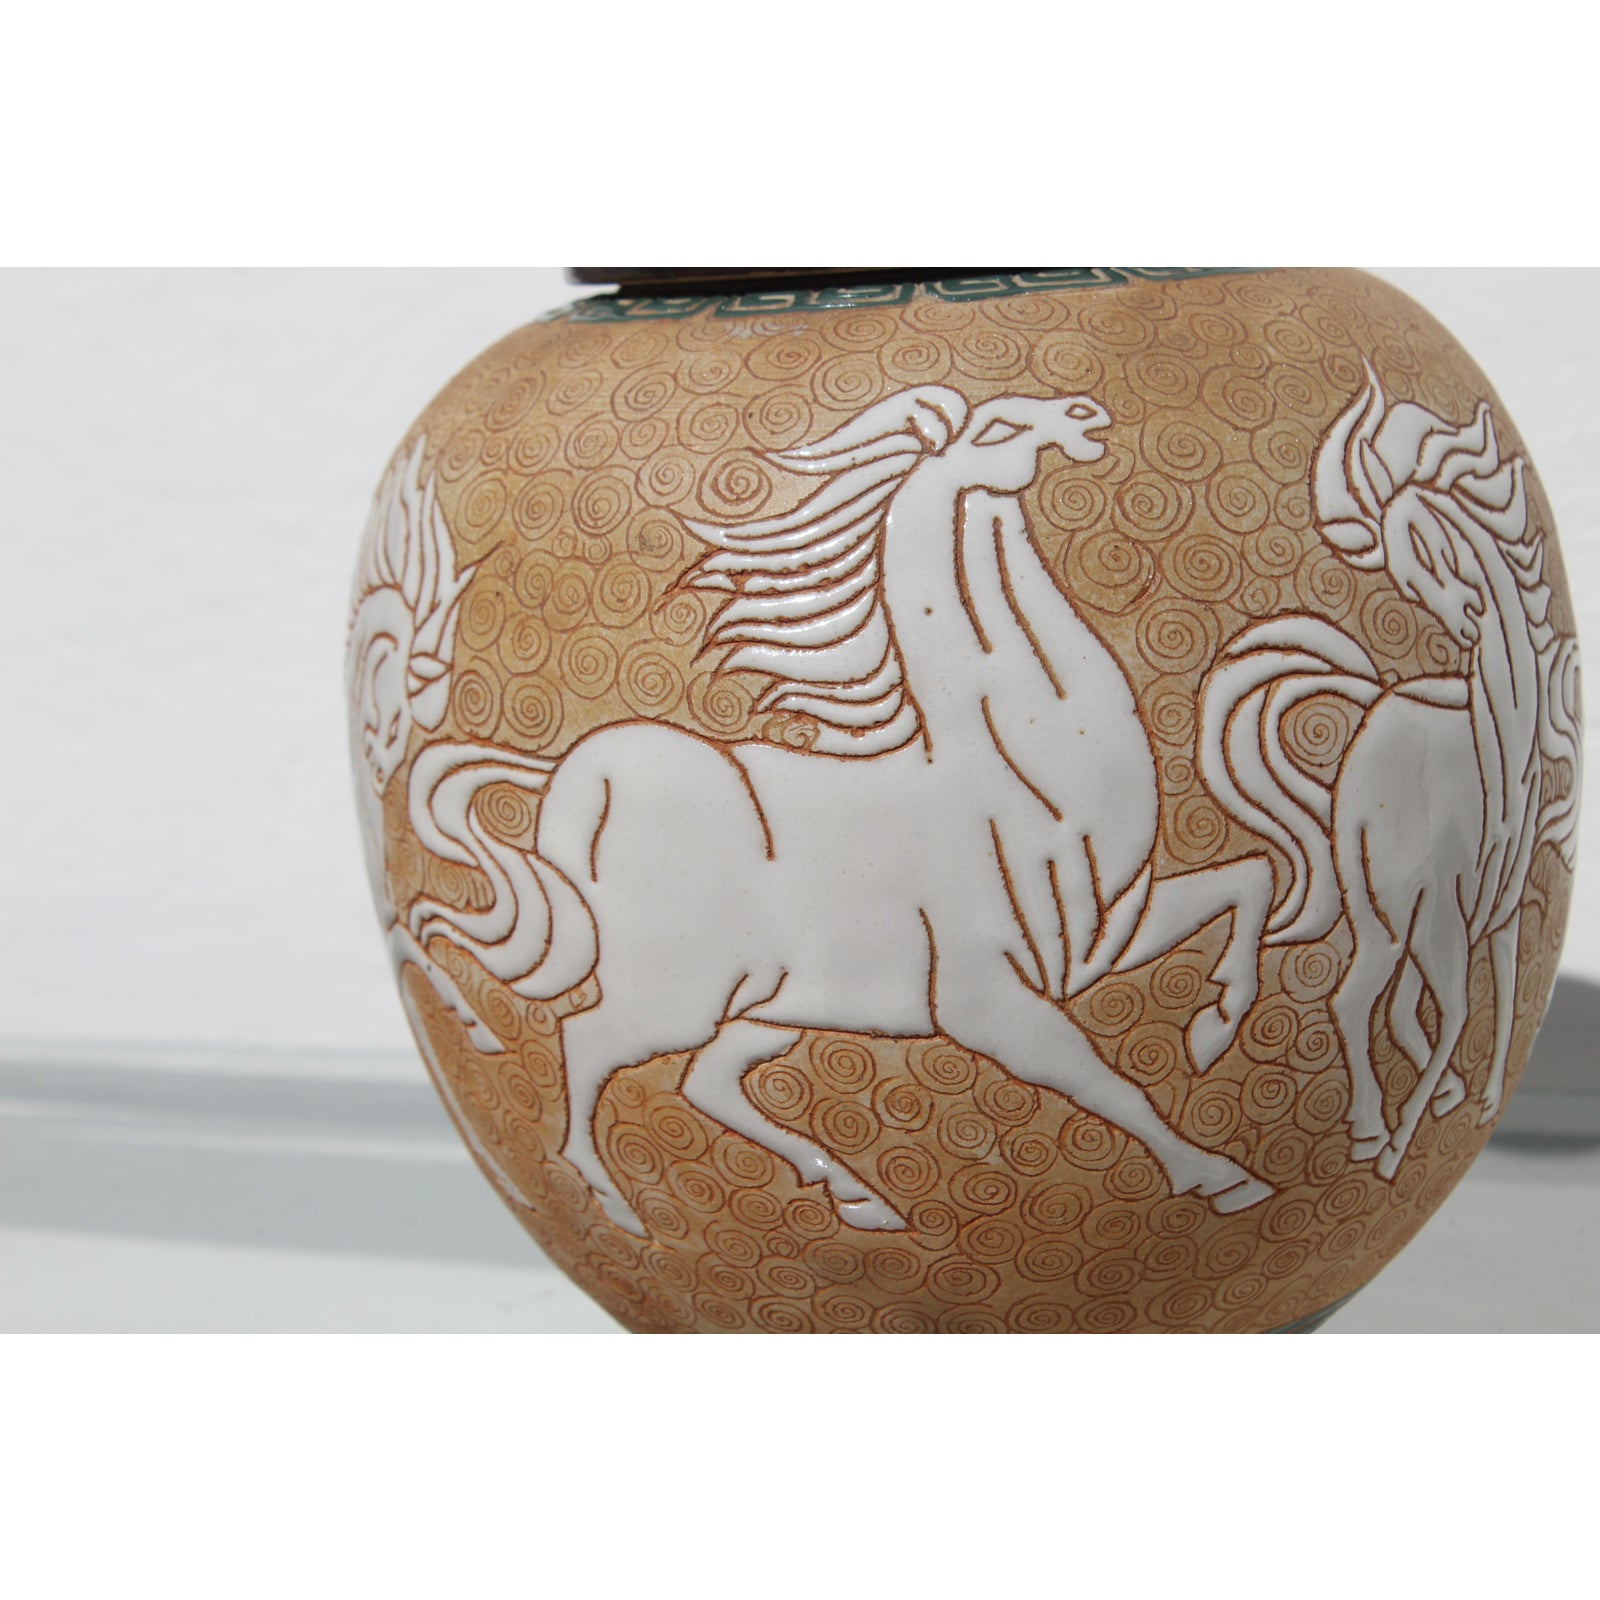 chinese-art-deco-prancing-horses-motif-porcelain-covered-jar-or-urn-1489